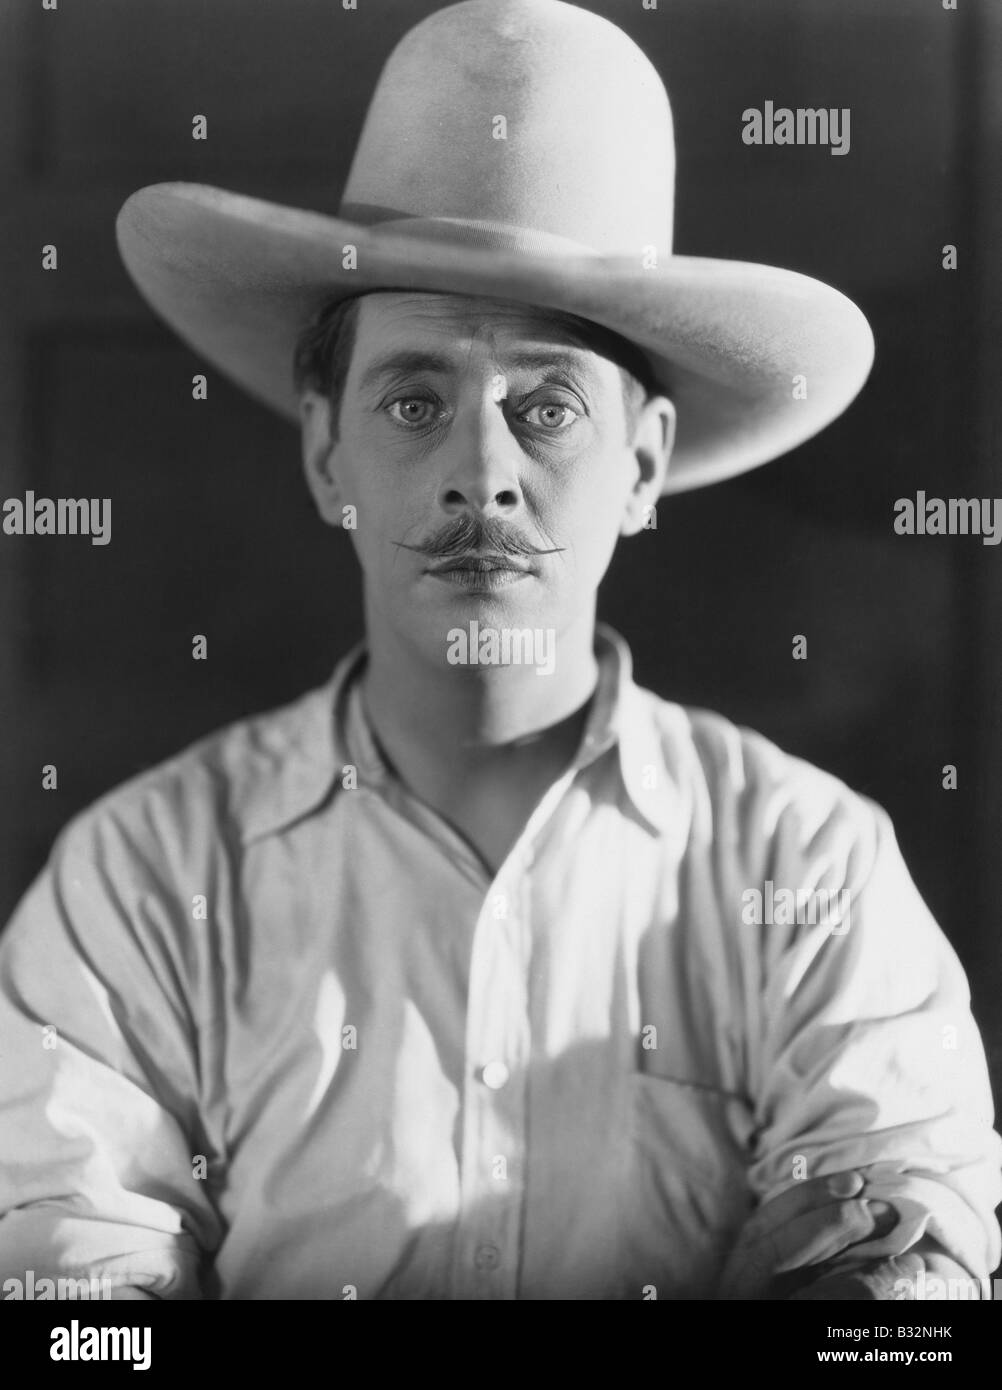 Portrait of man wearing cowboy hat Stock Photo